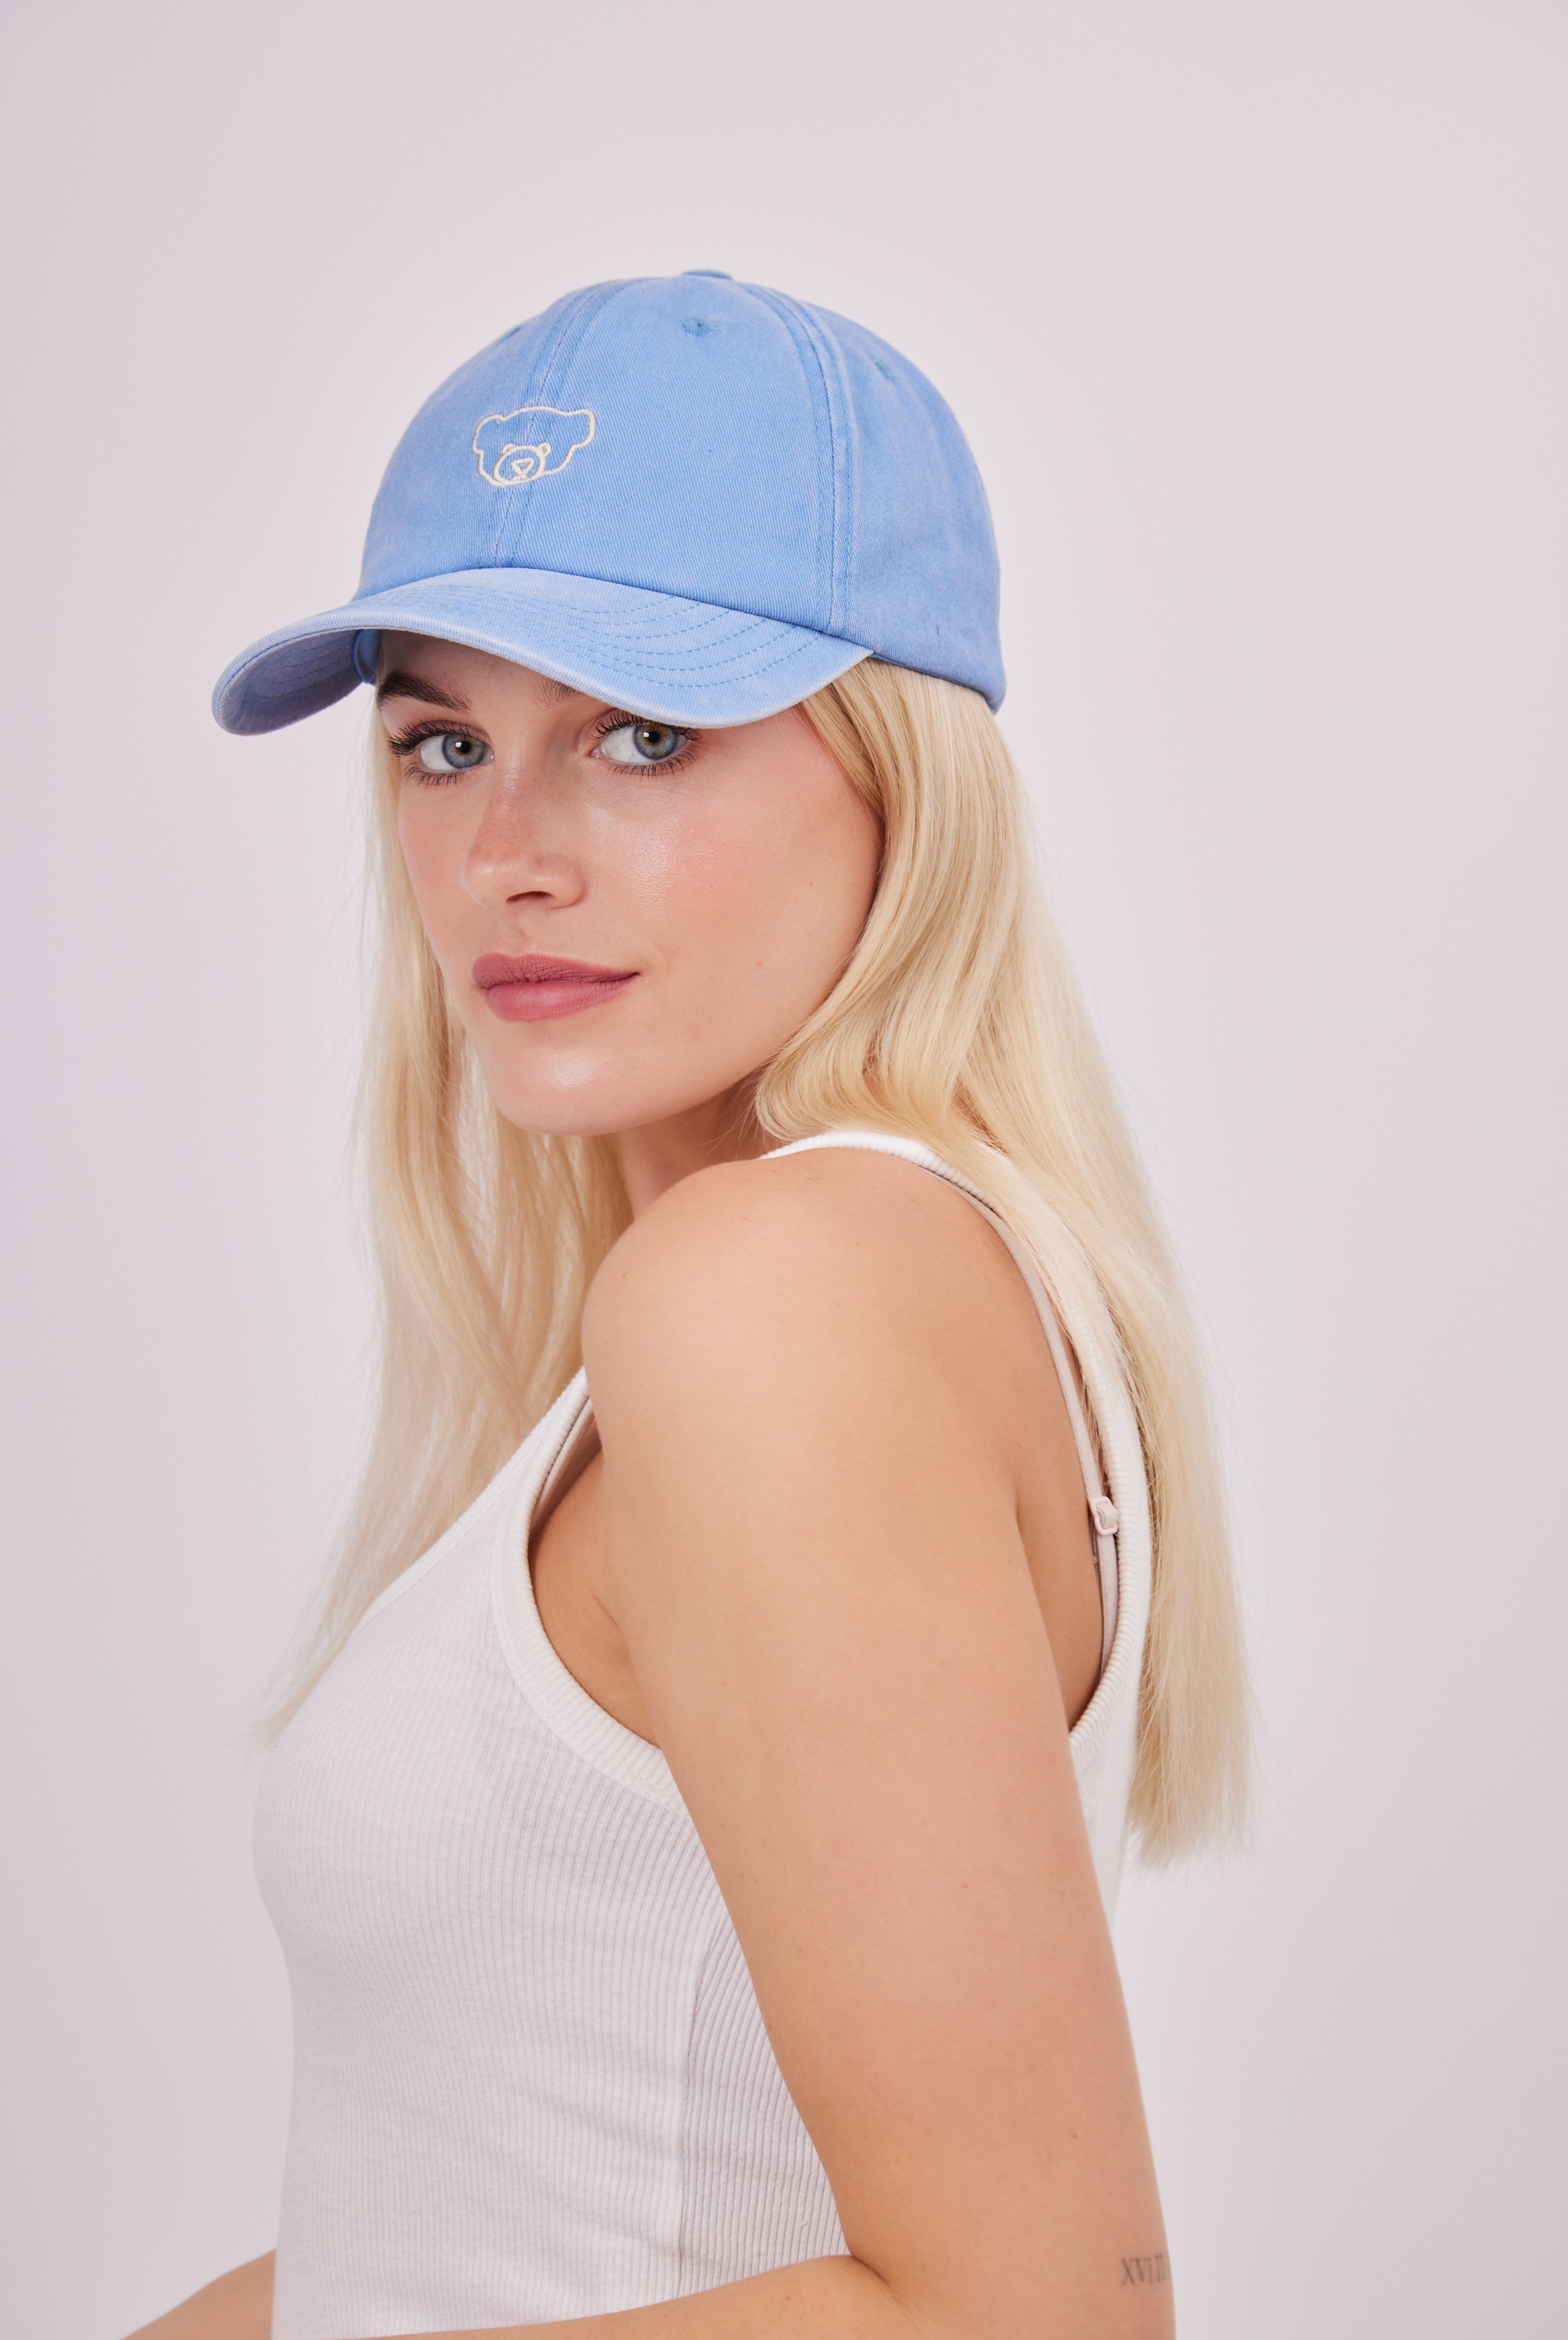 My Accessories London Bear Baseball Cap in Blue | cap | caps | hat | hats | transitional | summer | spring | winter | autumn | minimal | athleisure | sporty | cute | embroidered cap | embroidered | embroidery | activewear | loungewear | bear cap | embroidered cap | embroidered hat | women's hats | women's hat | women's accessories | blue cap | blue hat